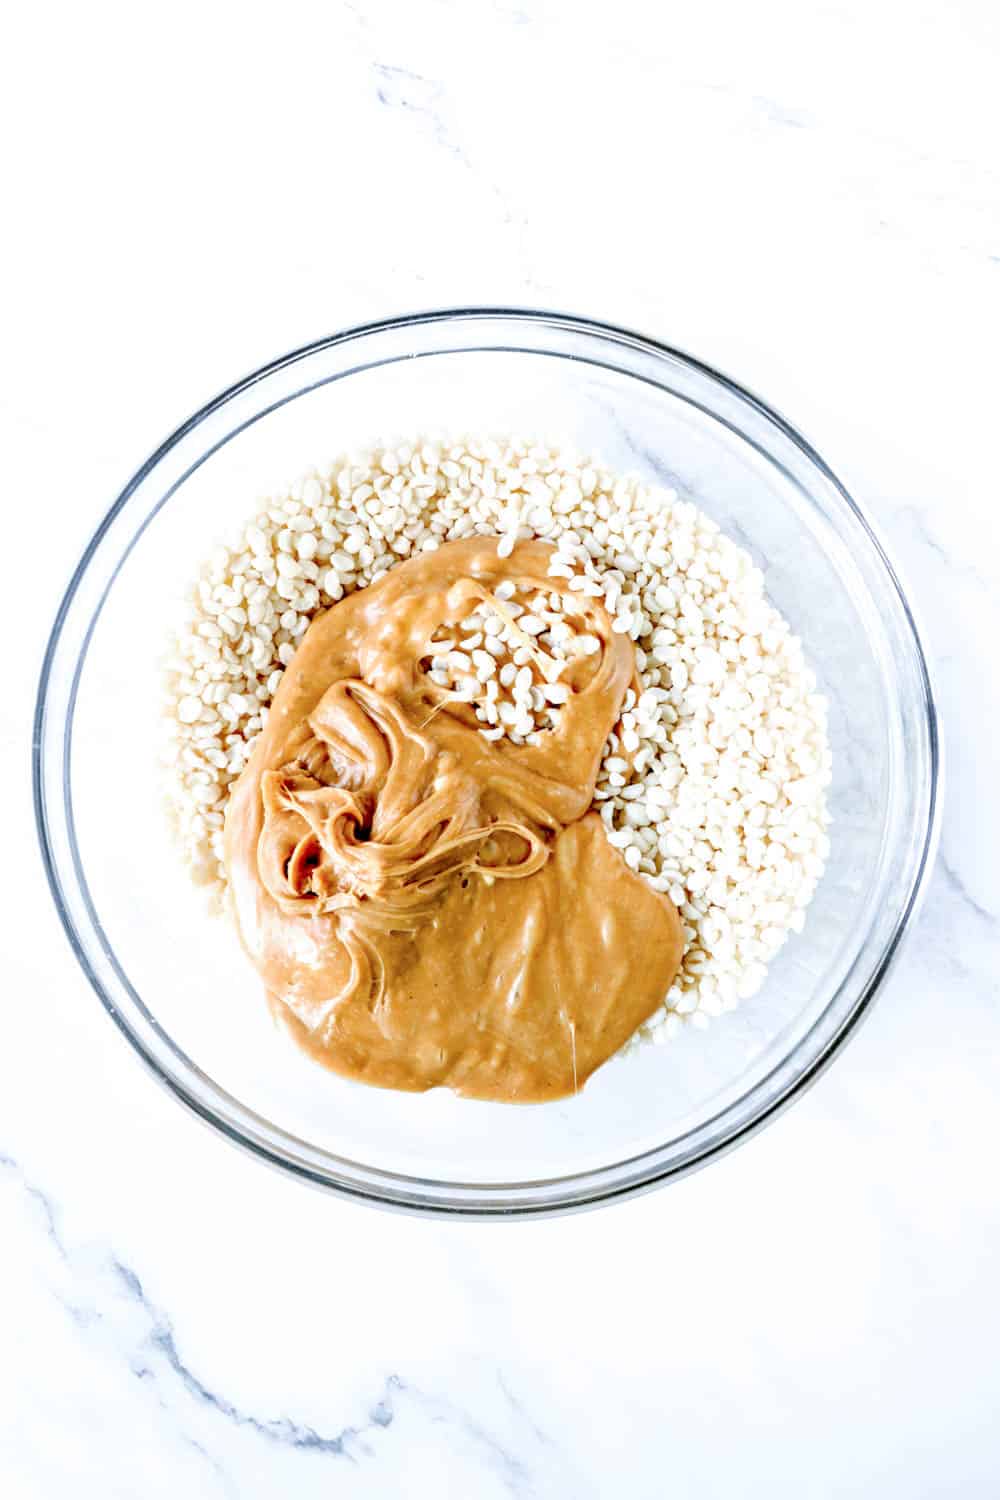 mix rice krispie and peanut butter mixture